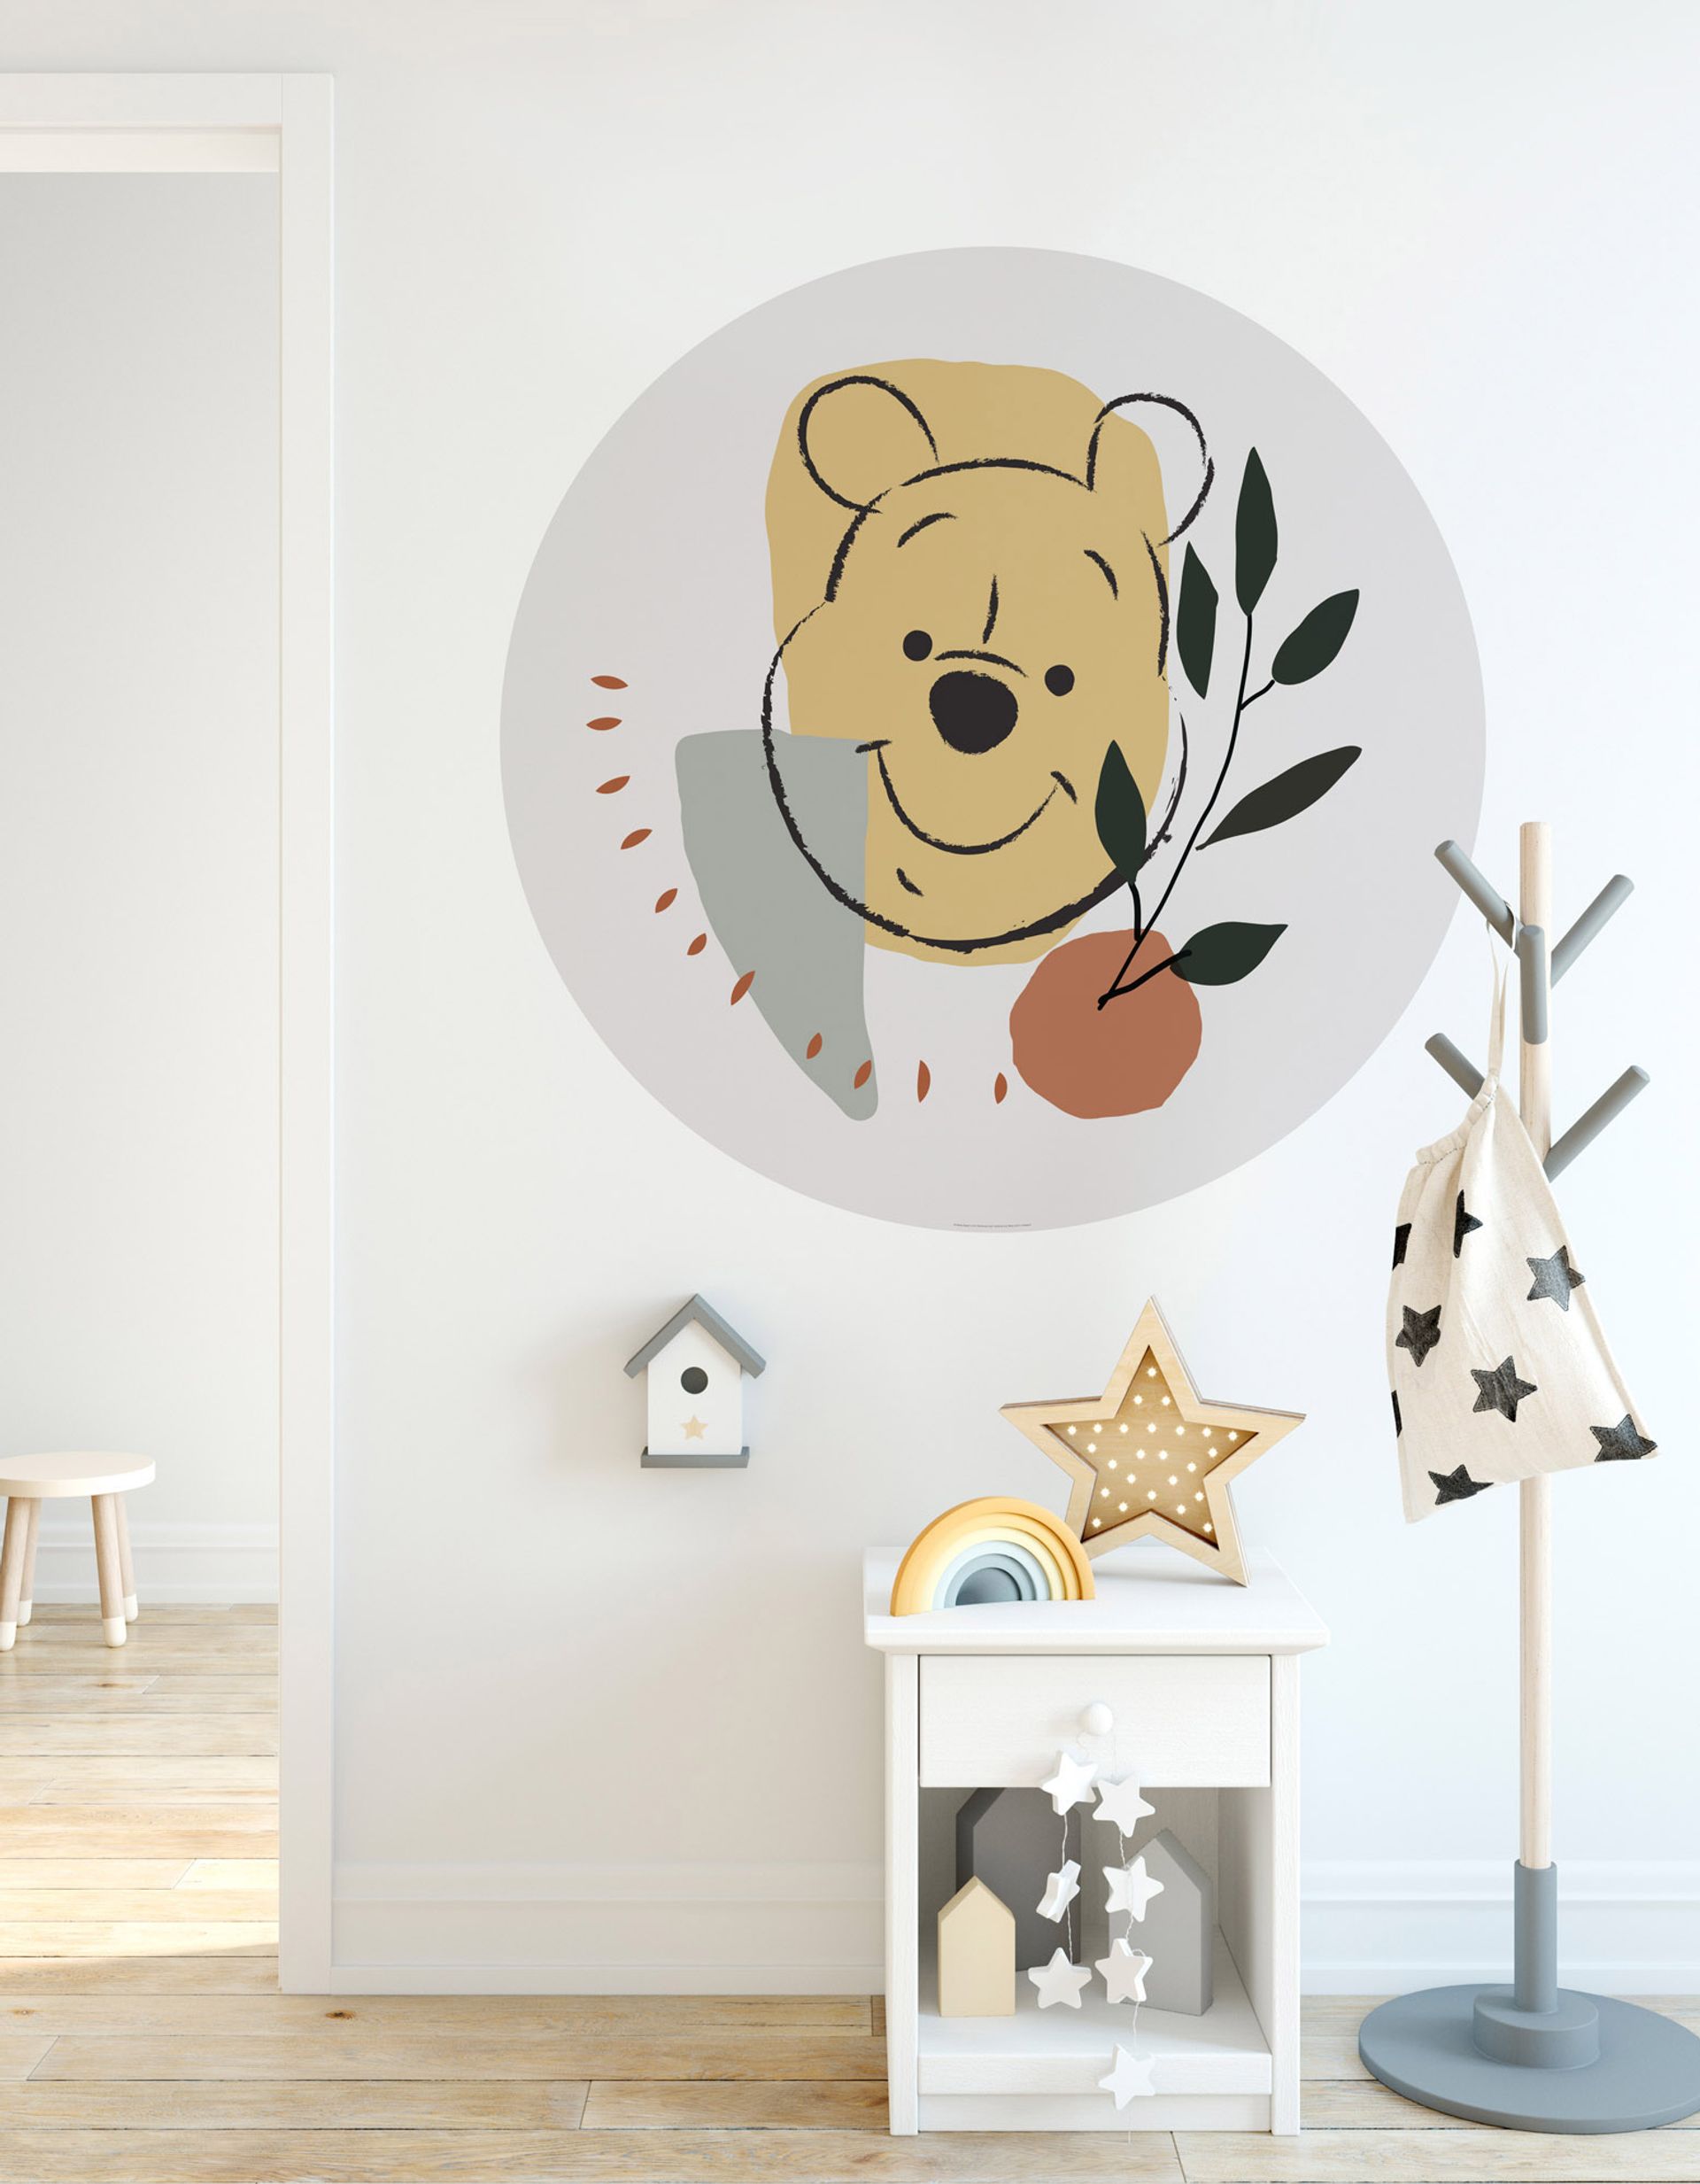 Selbstklebende Vlies Fototapete/Wandtattoo - Winnie Pooh Smile - Größe 125 x 125 cm